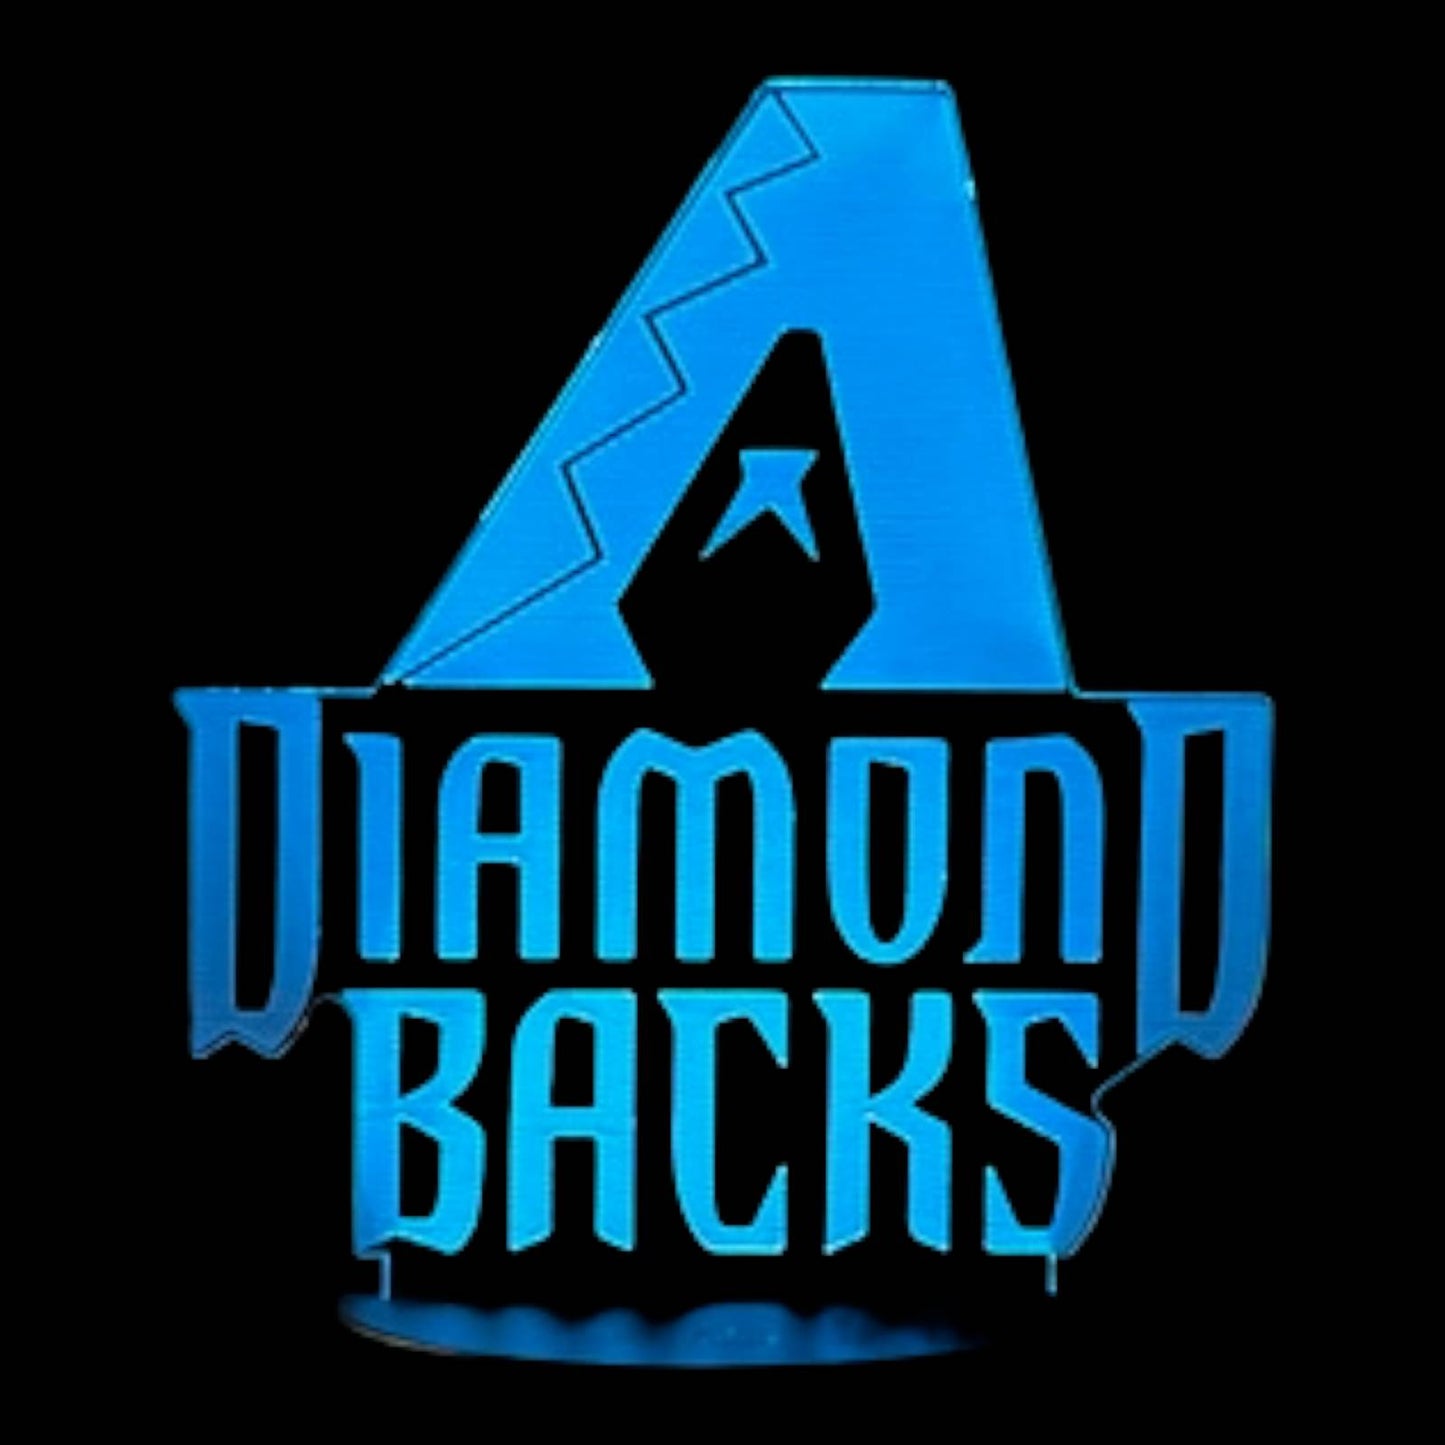 Arizona Diamondbacks 3D LED Night-Light 7 Color Changing Lamp w/ Touch Switch